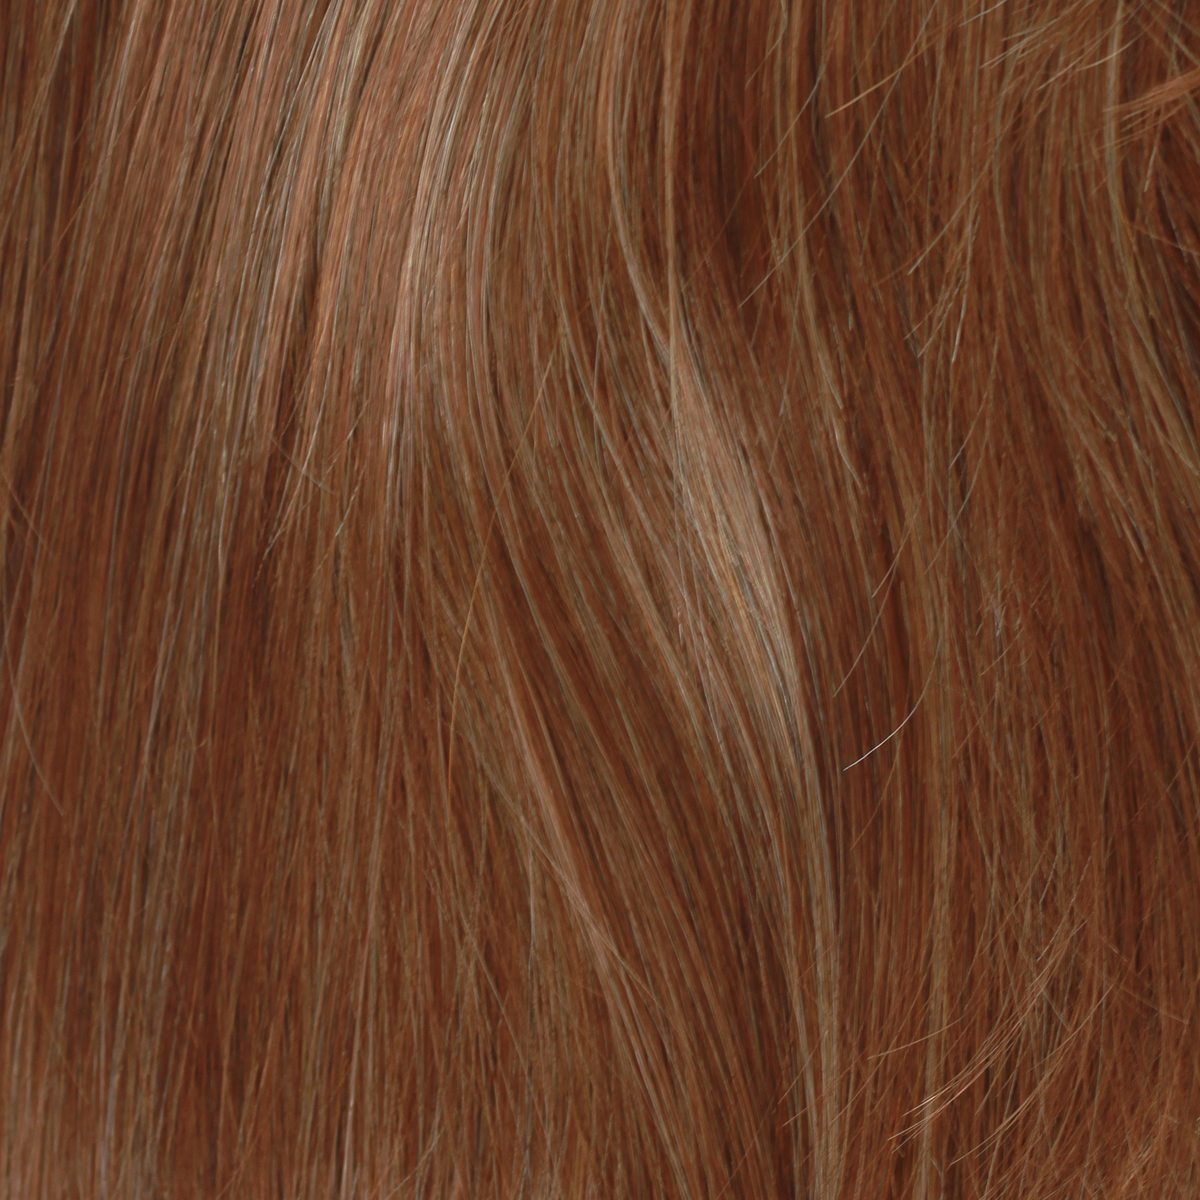 Admiration Wig Natural Image - image Caramel-Glow-crop on https://purewigs.com